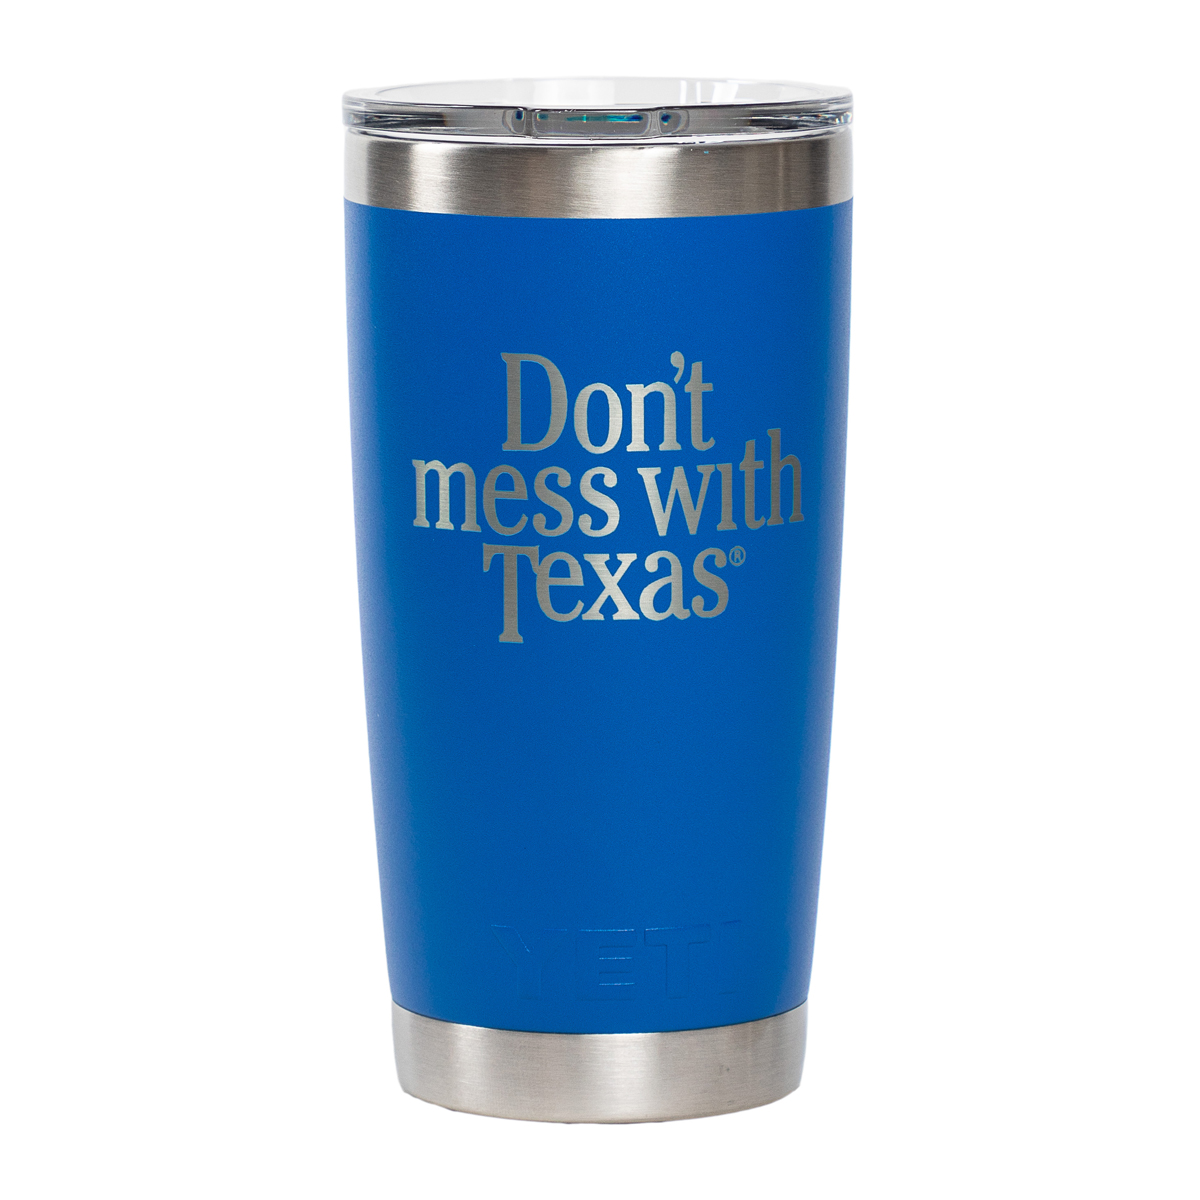 Don't mess with Texas YETI Rambler® 20oz. Tumbler, Blue